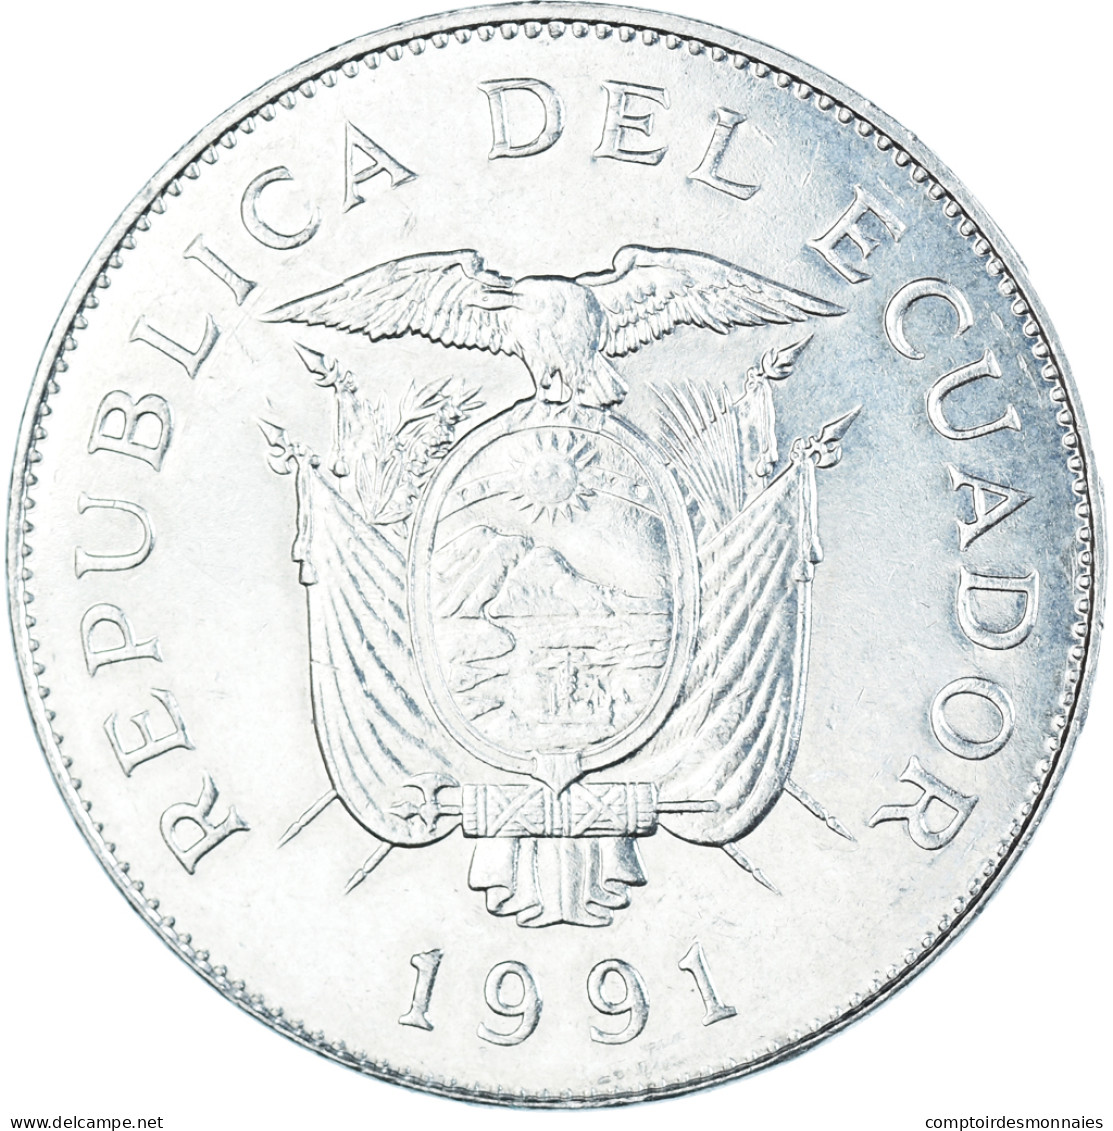 Monnaie, Équateur, 50 Sucres, 1991 - Ecuador